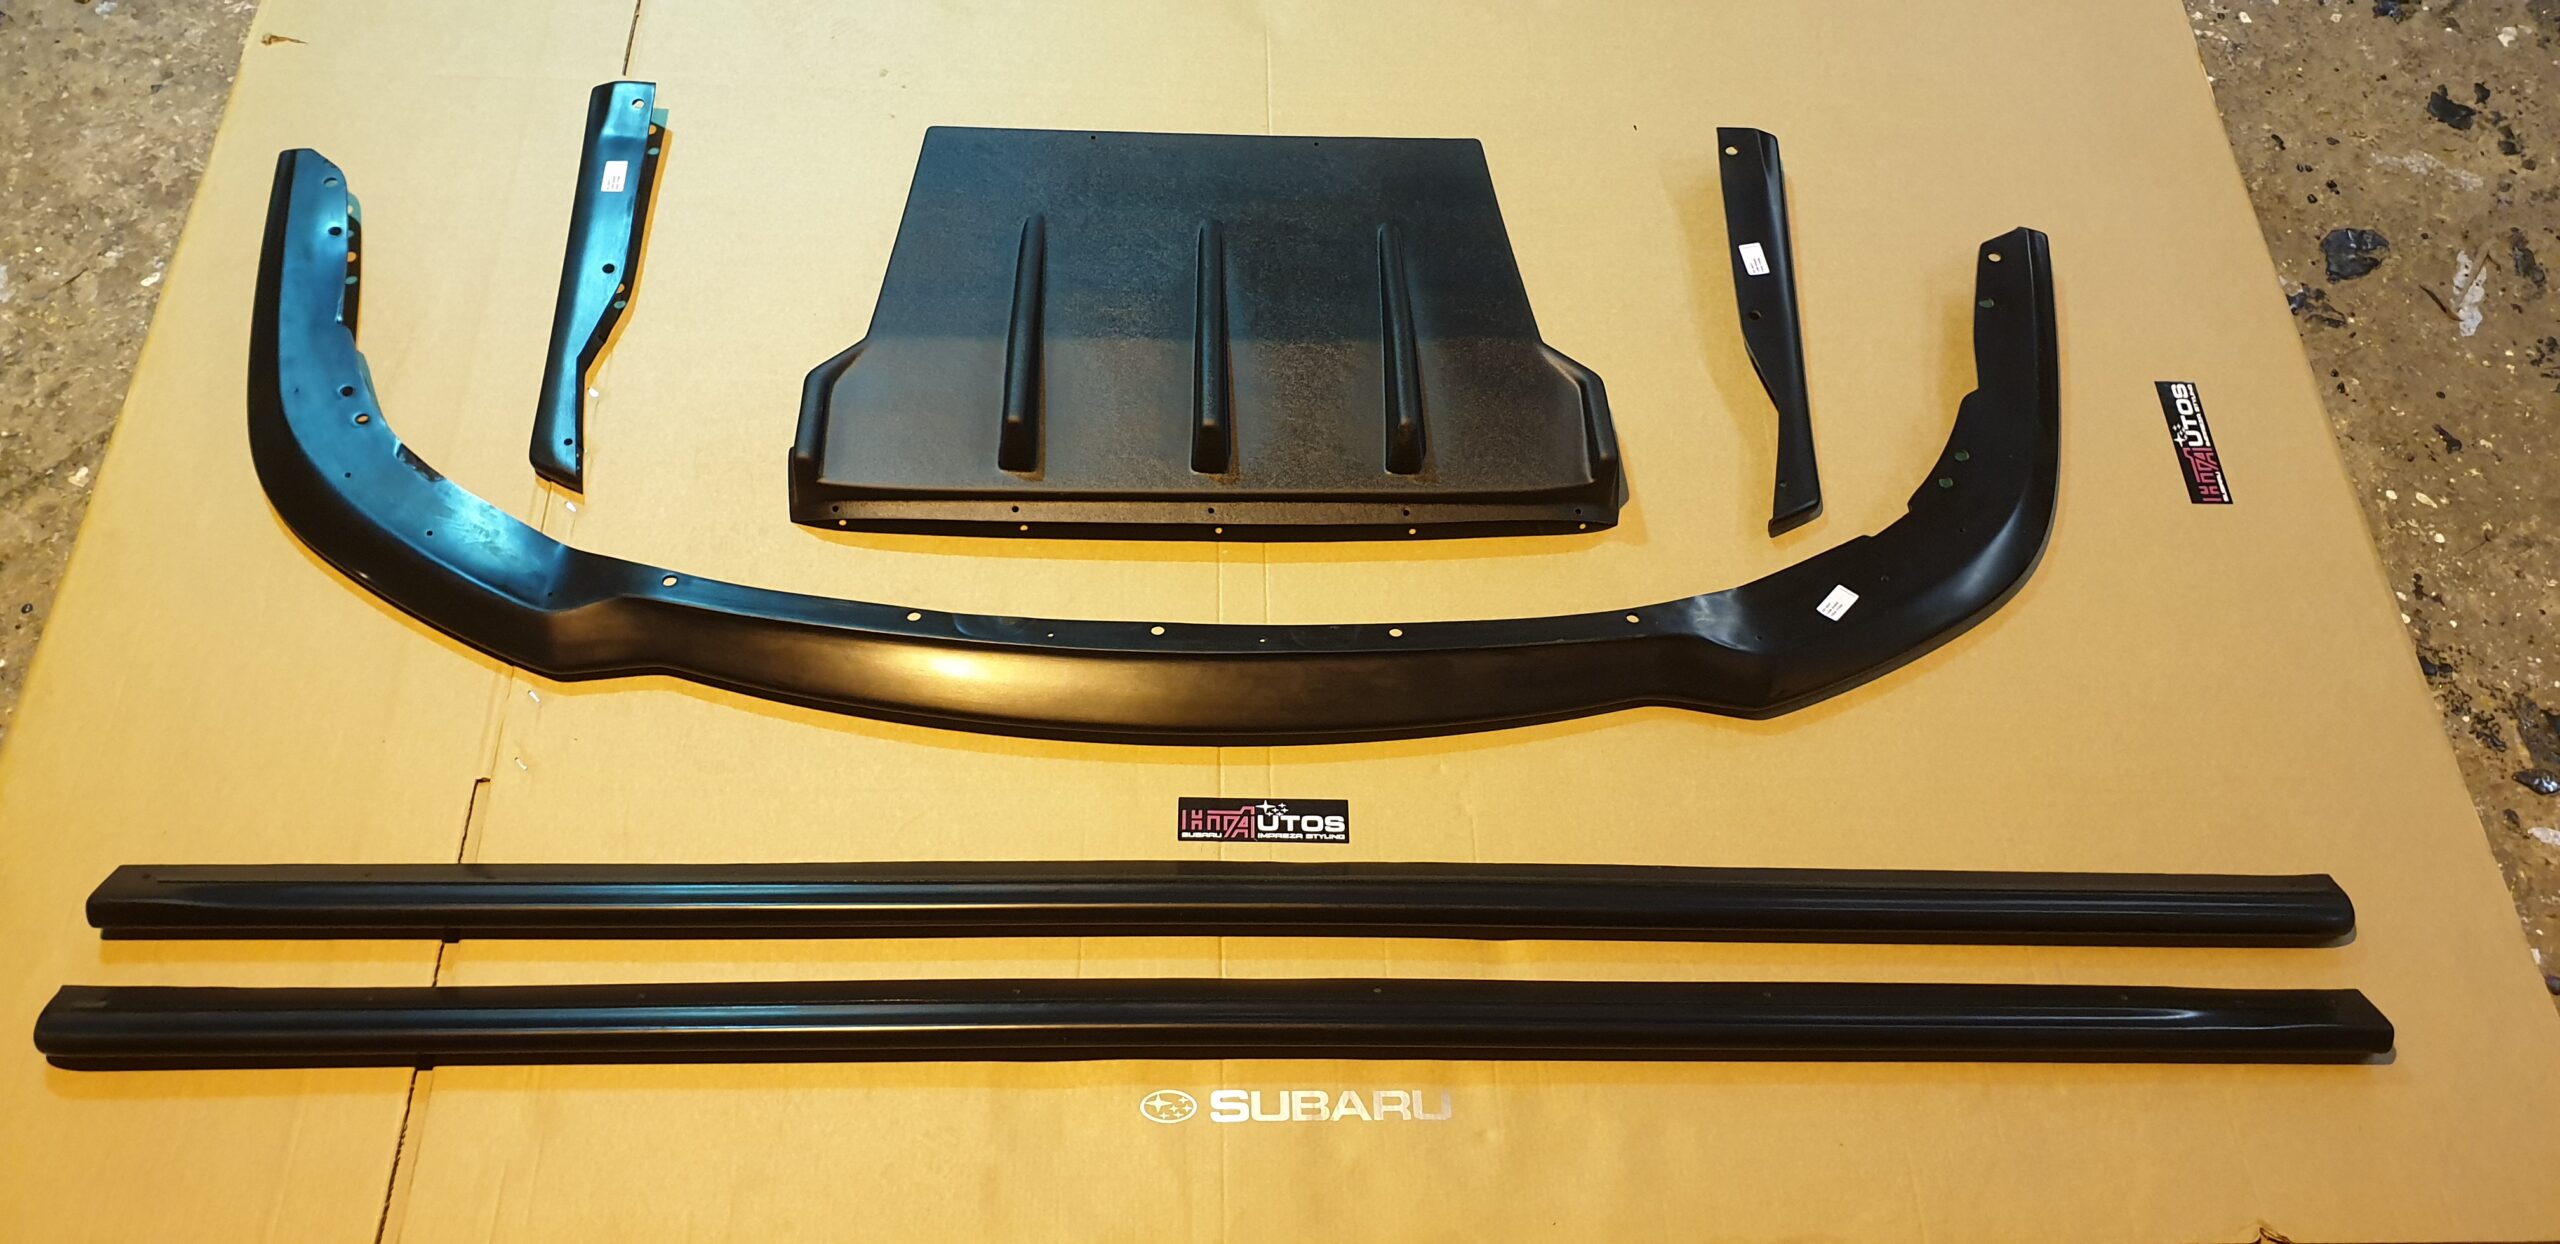 Subaru STi WRX SEDAN 2011-14. Full Body Kit & Rear Diffuser